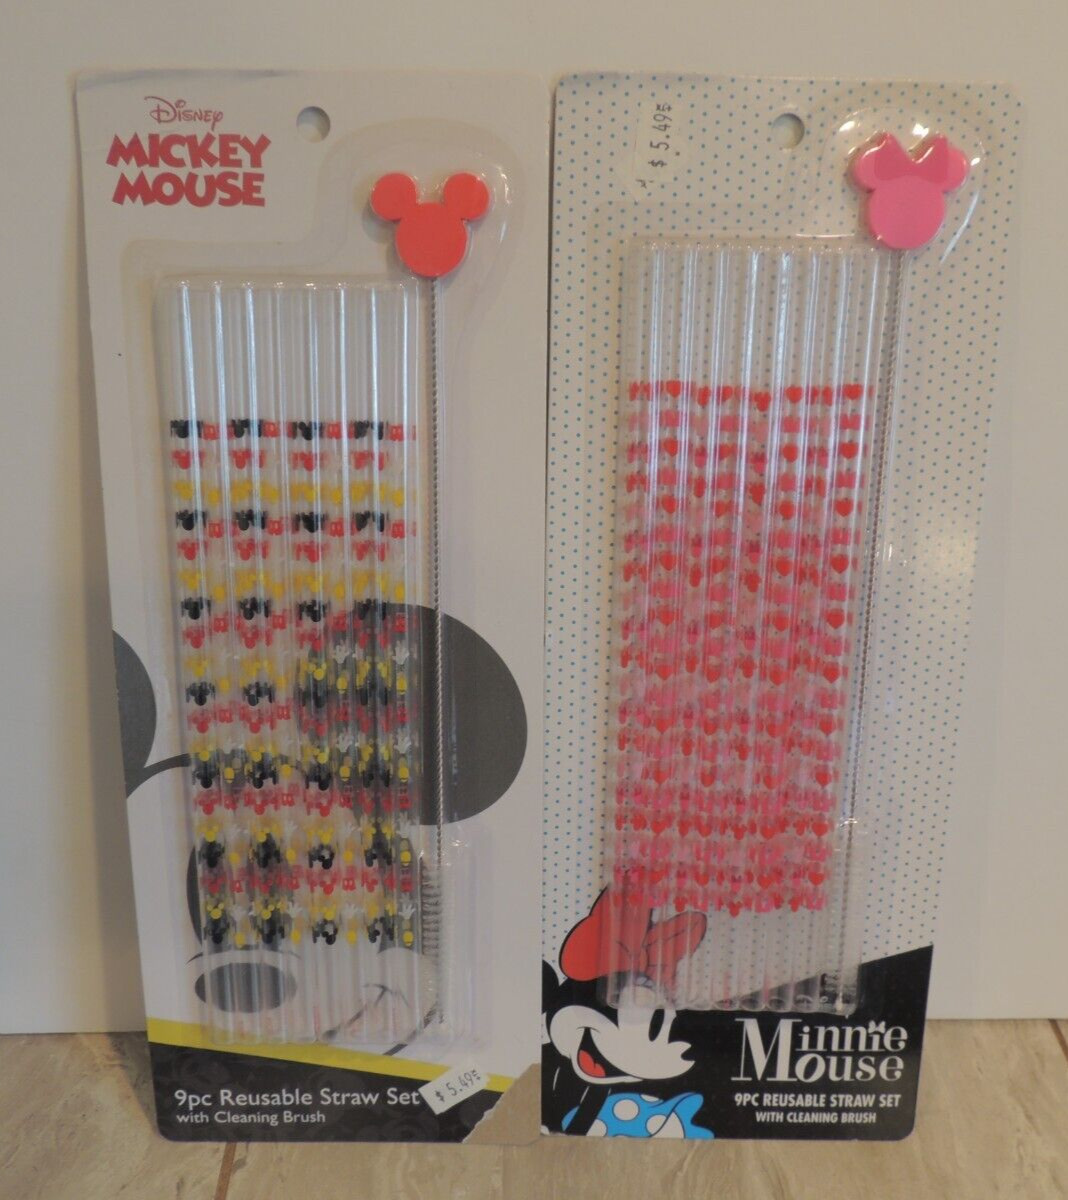 Disney Mickey and Mini Mouse 9 Pc Reusable straws (18 straws total) W/ Brush